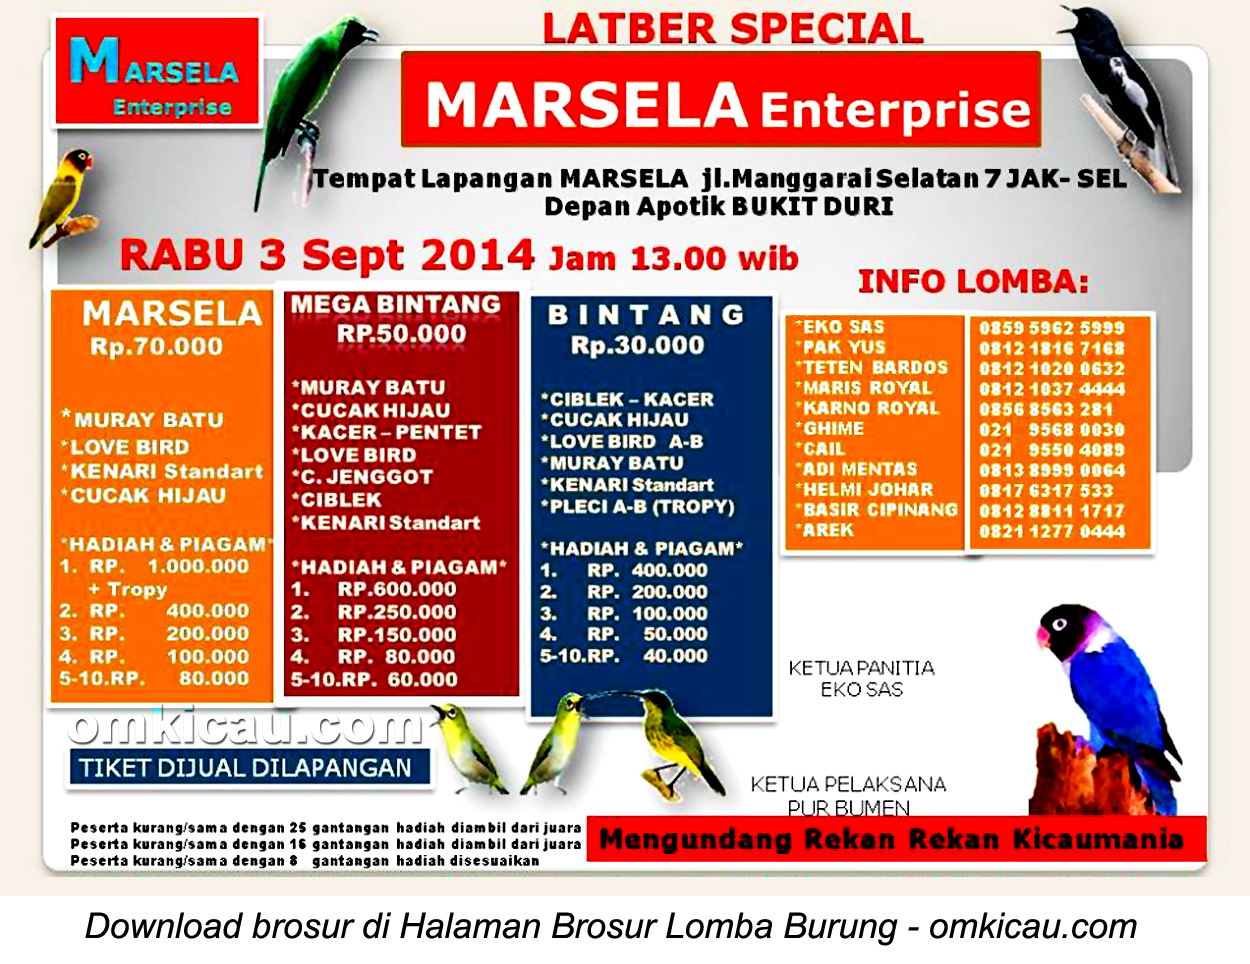 Brosur Latber Special Marsela Enterprise, Jakarta Selatan, 3 September 2014